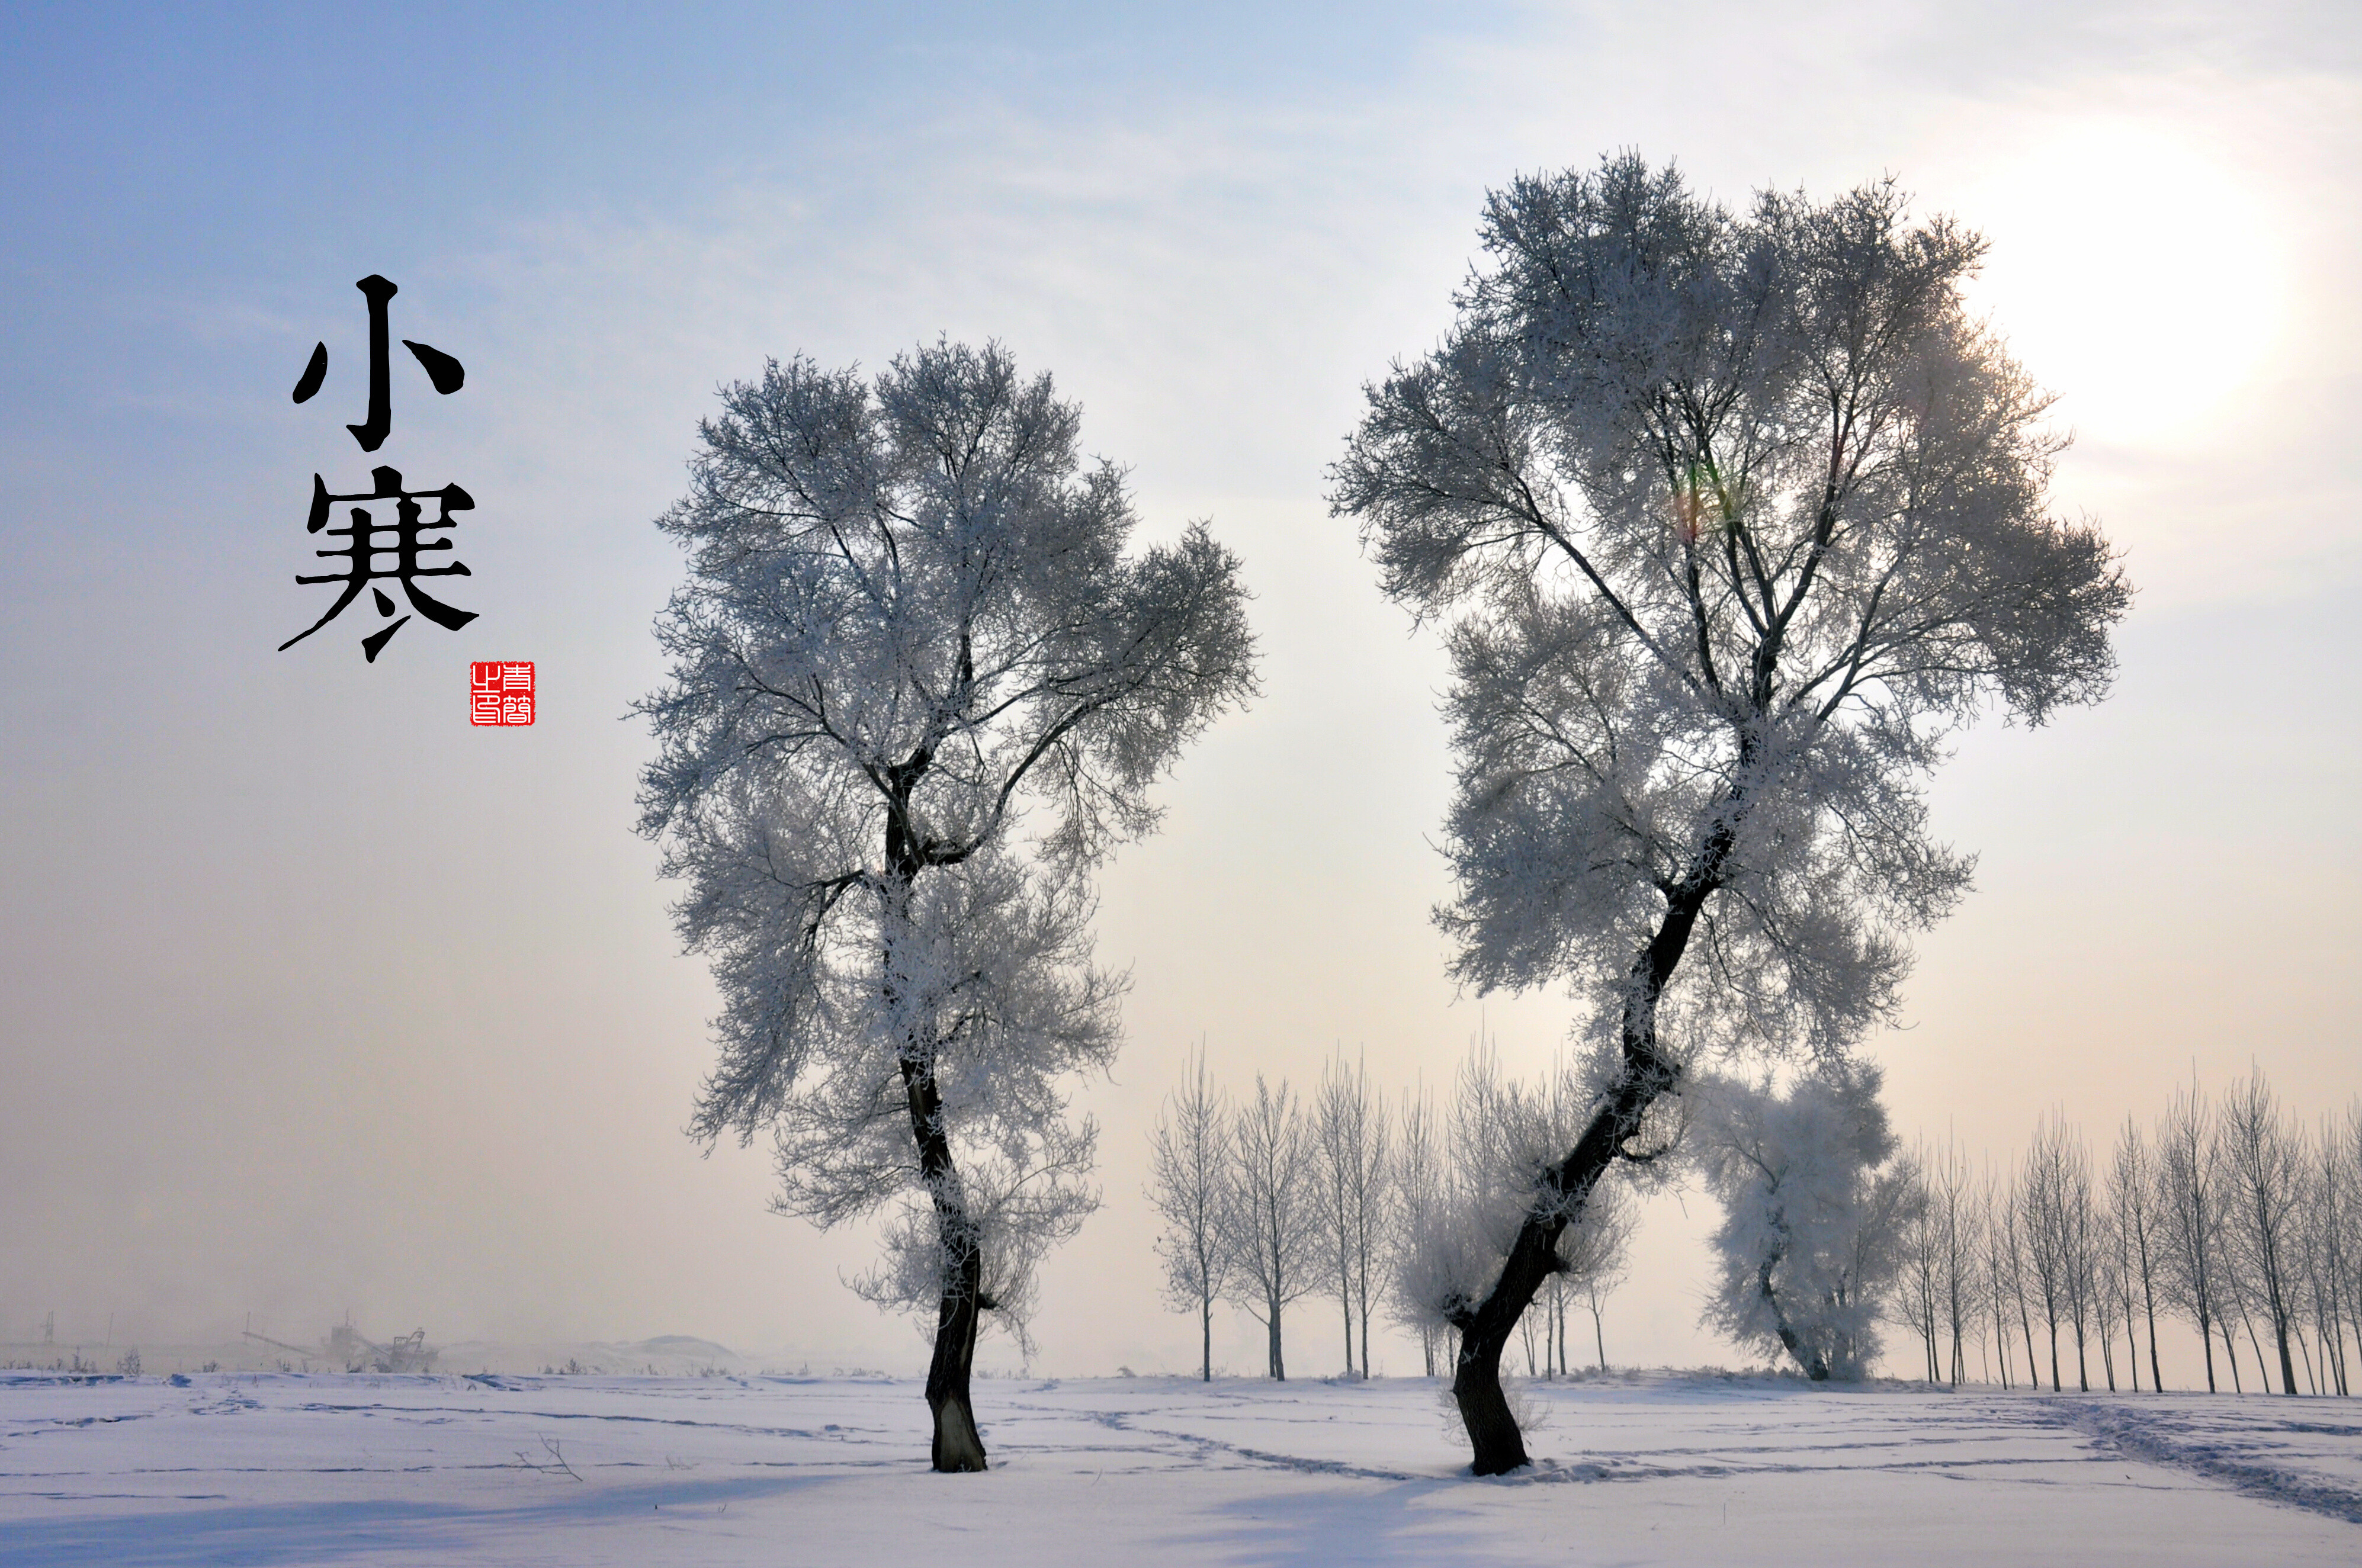 General 3988x2648 snow trees kanji